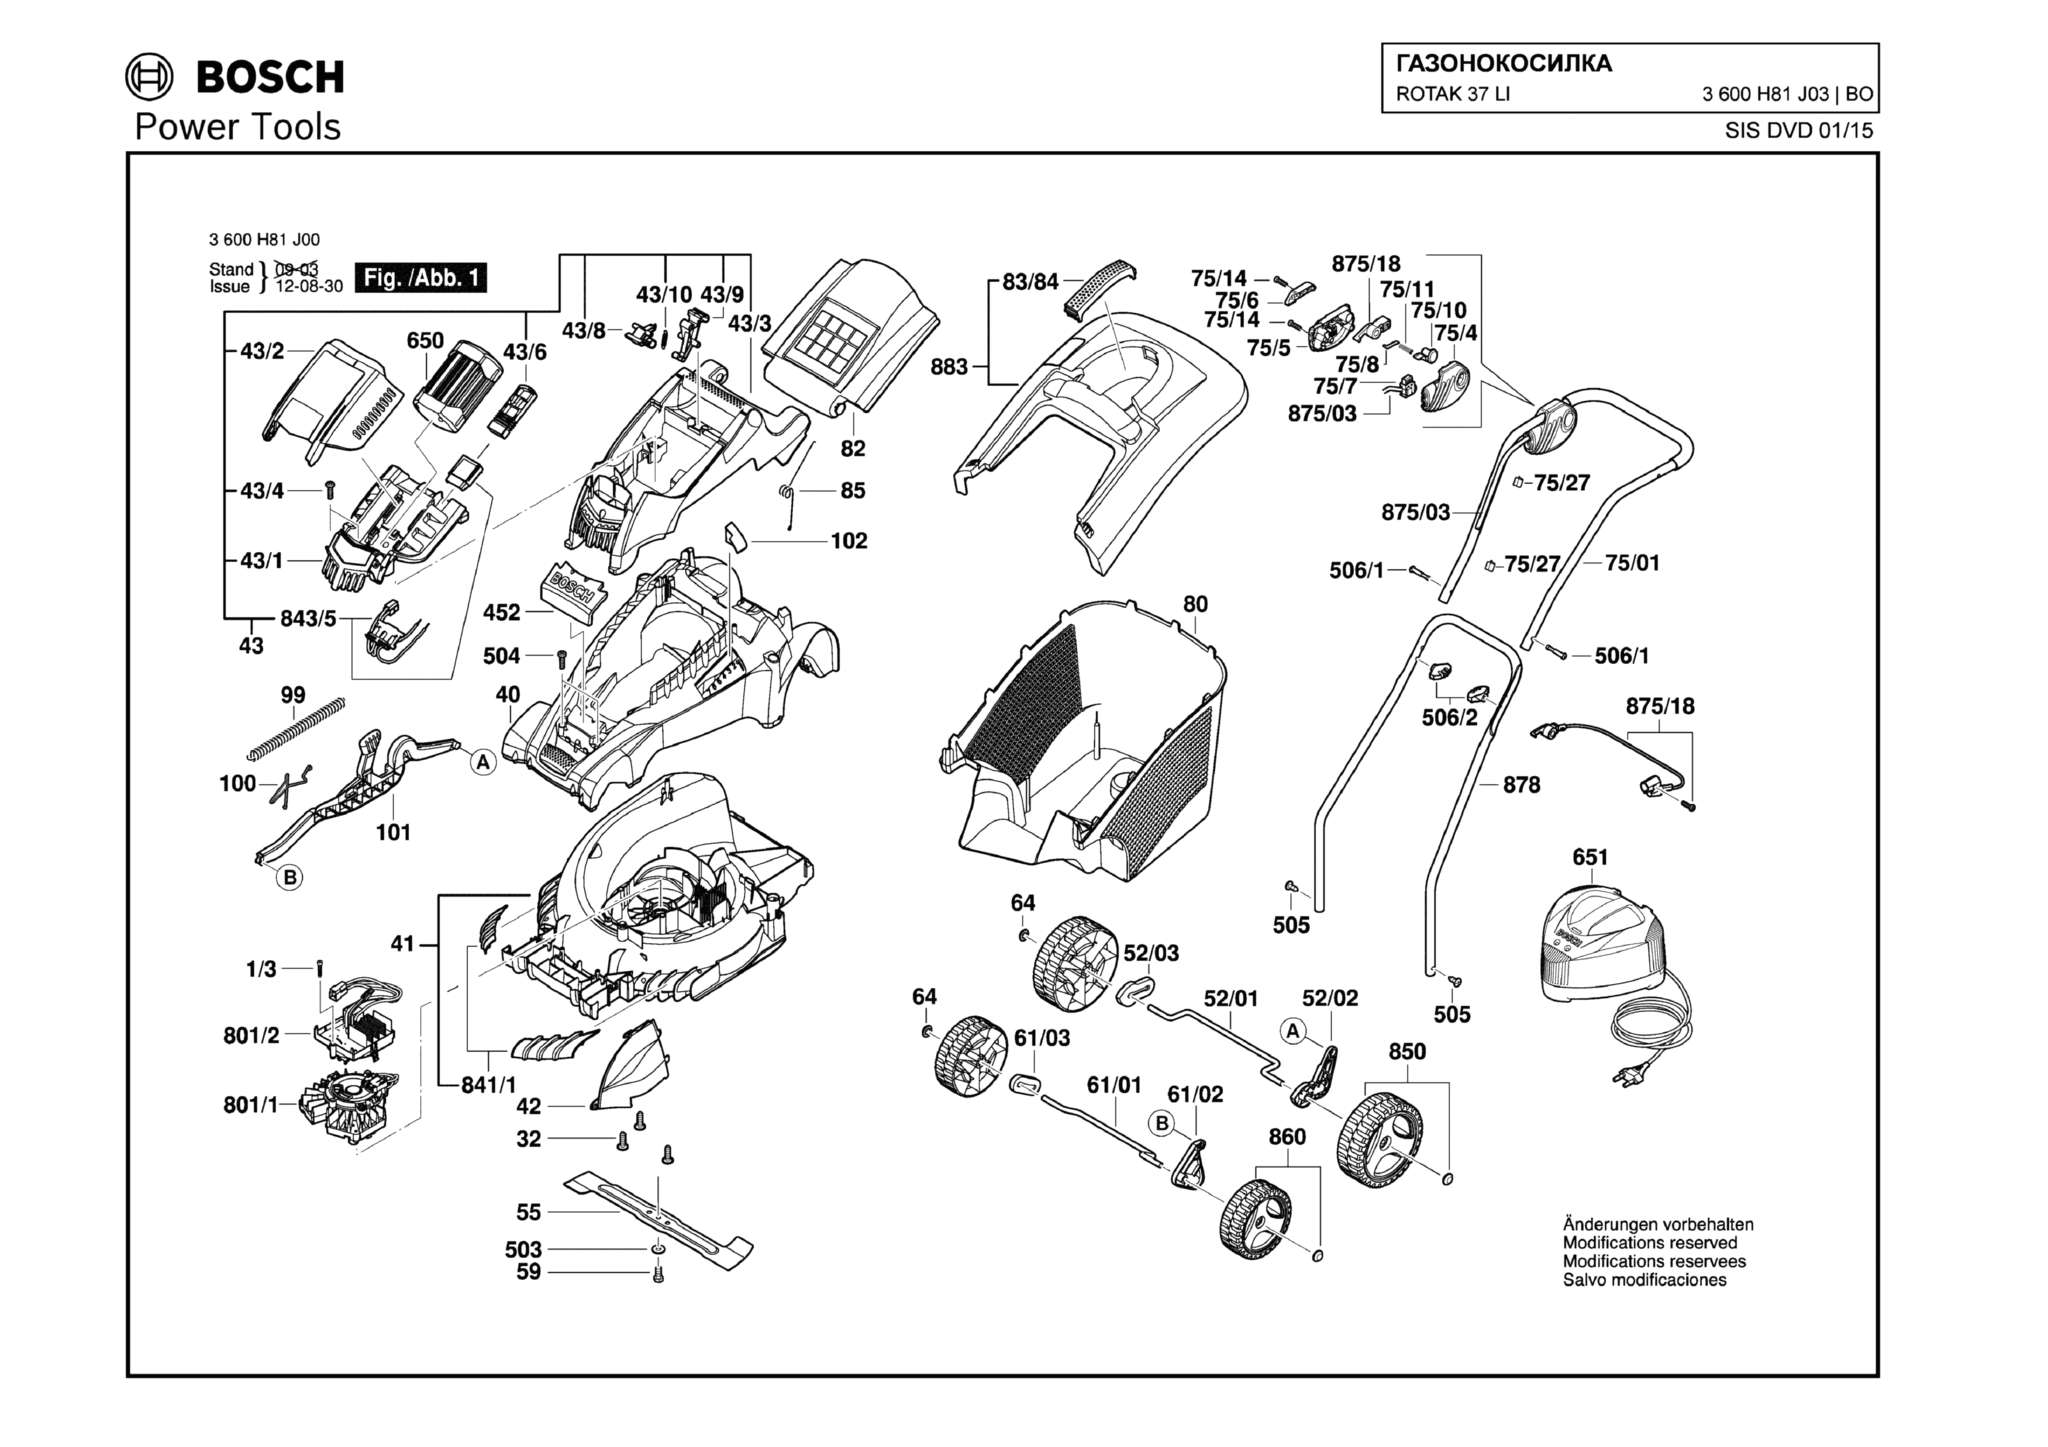 Запчасти, схема и деталировка Bosch ROTAK 37 LI (ТИП 3600H81J03)